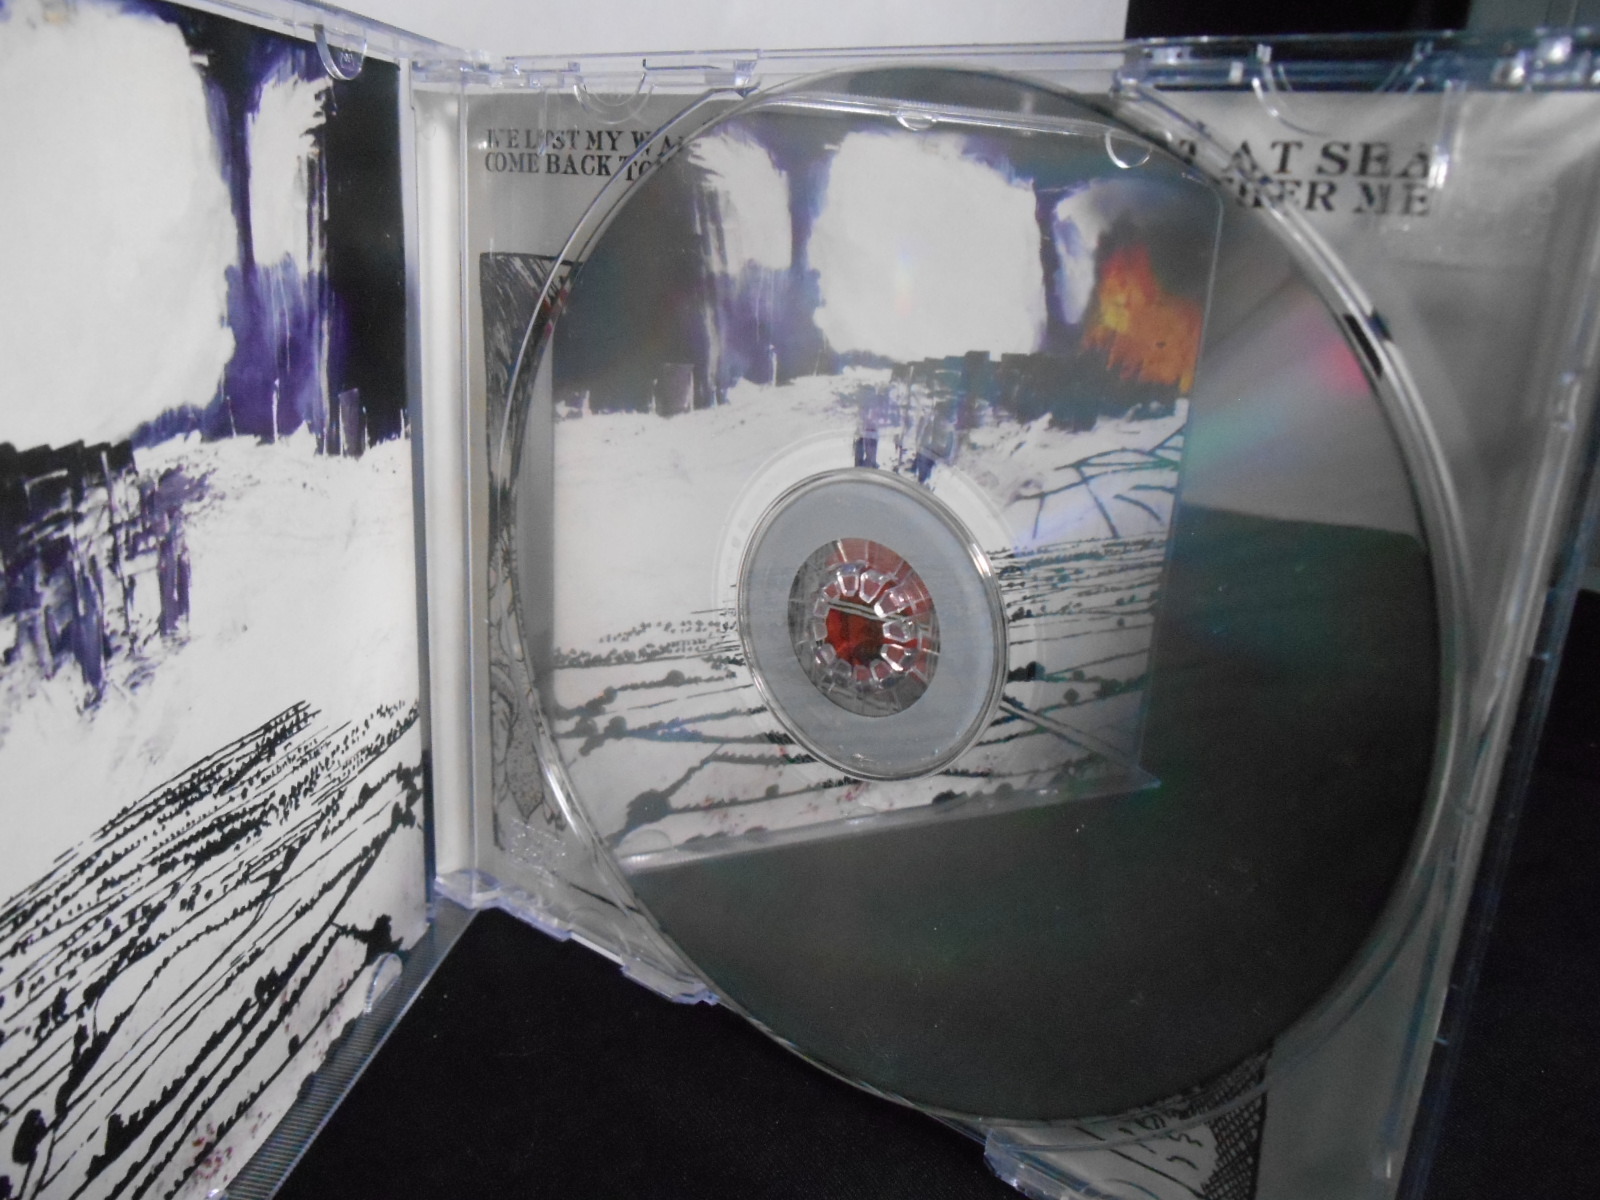 CD - Radiohead - Kid A